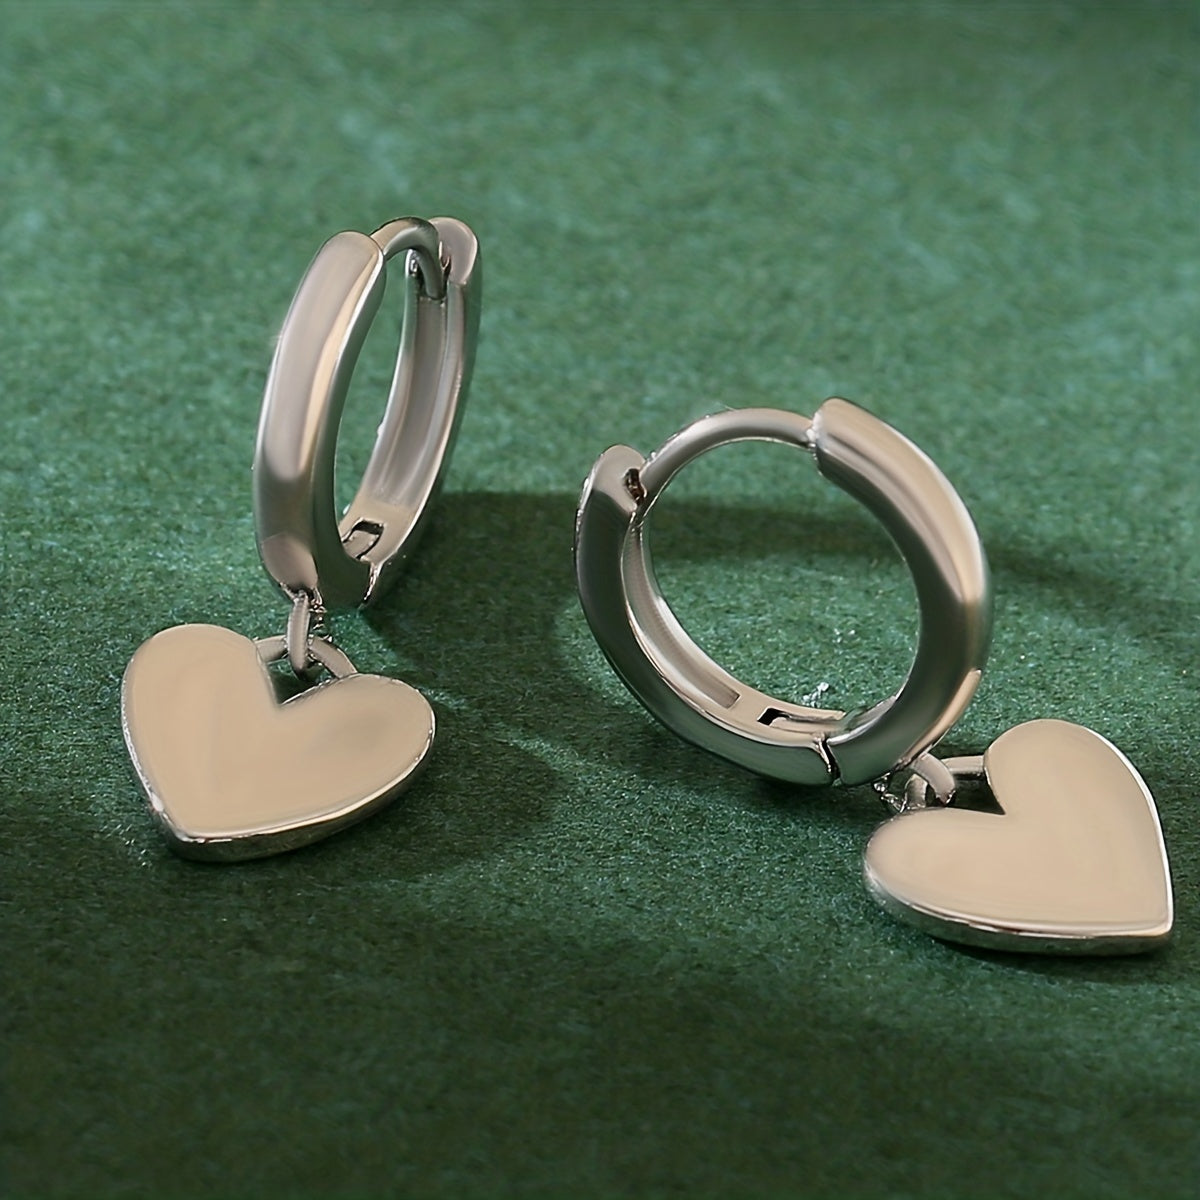 14K Gold Plated Heart Drop Earrings For Women Cute Jewelry 1Pair